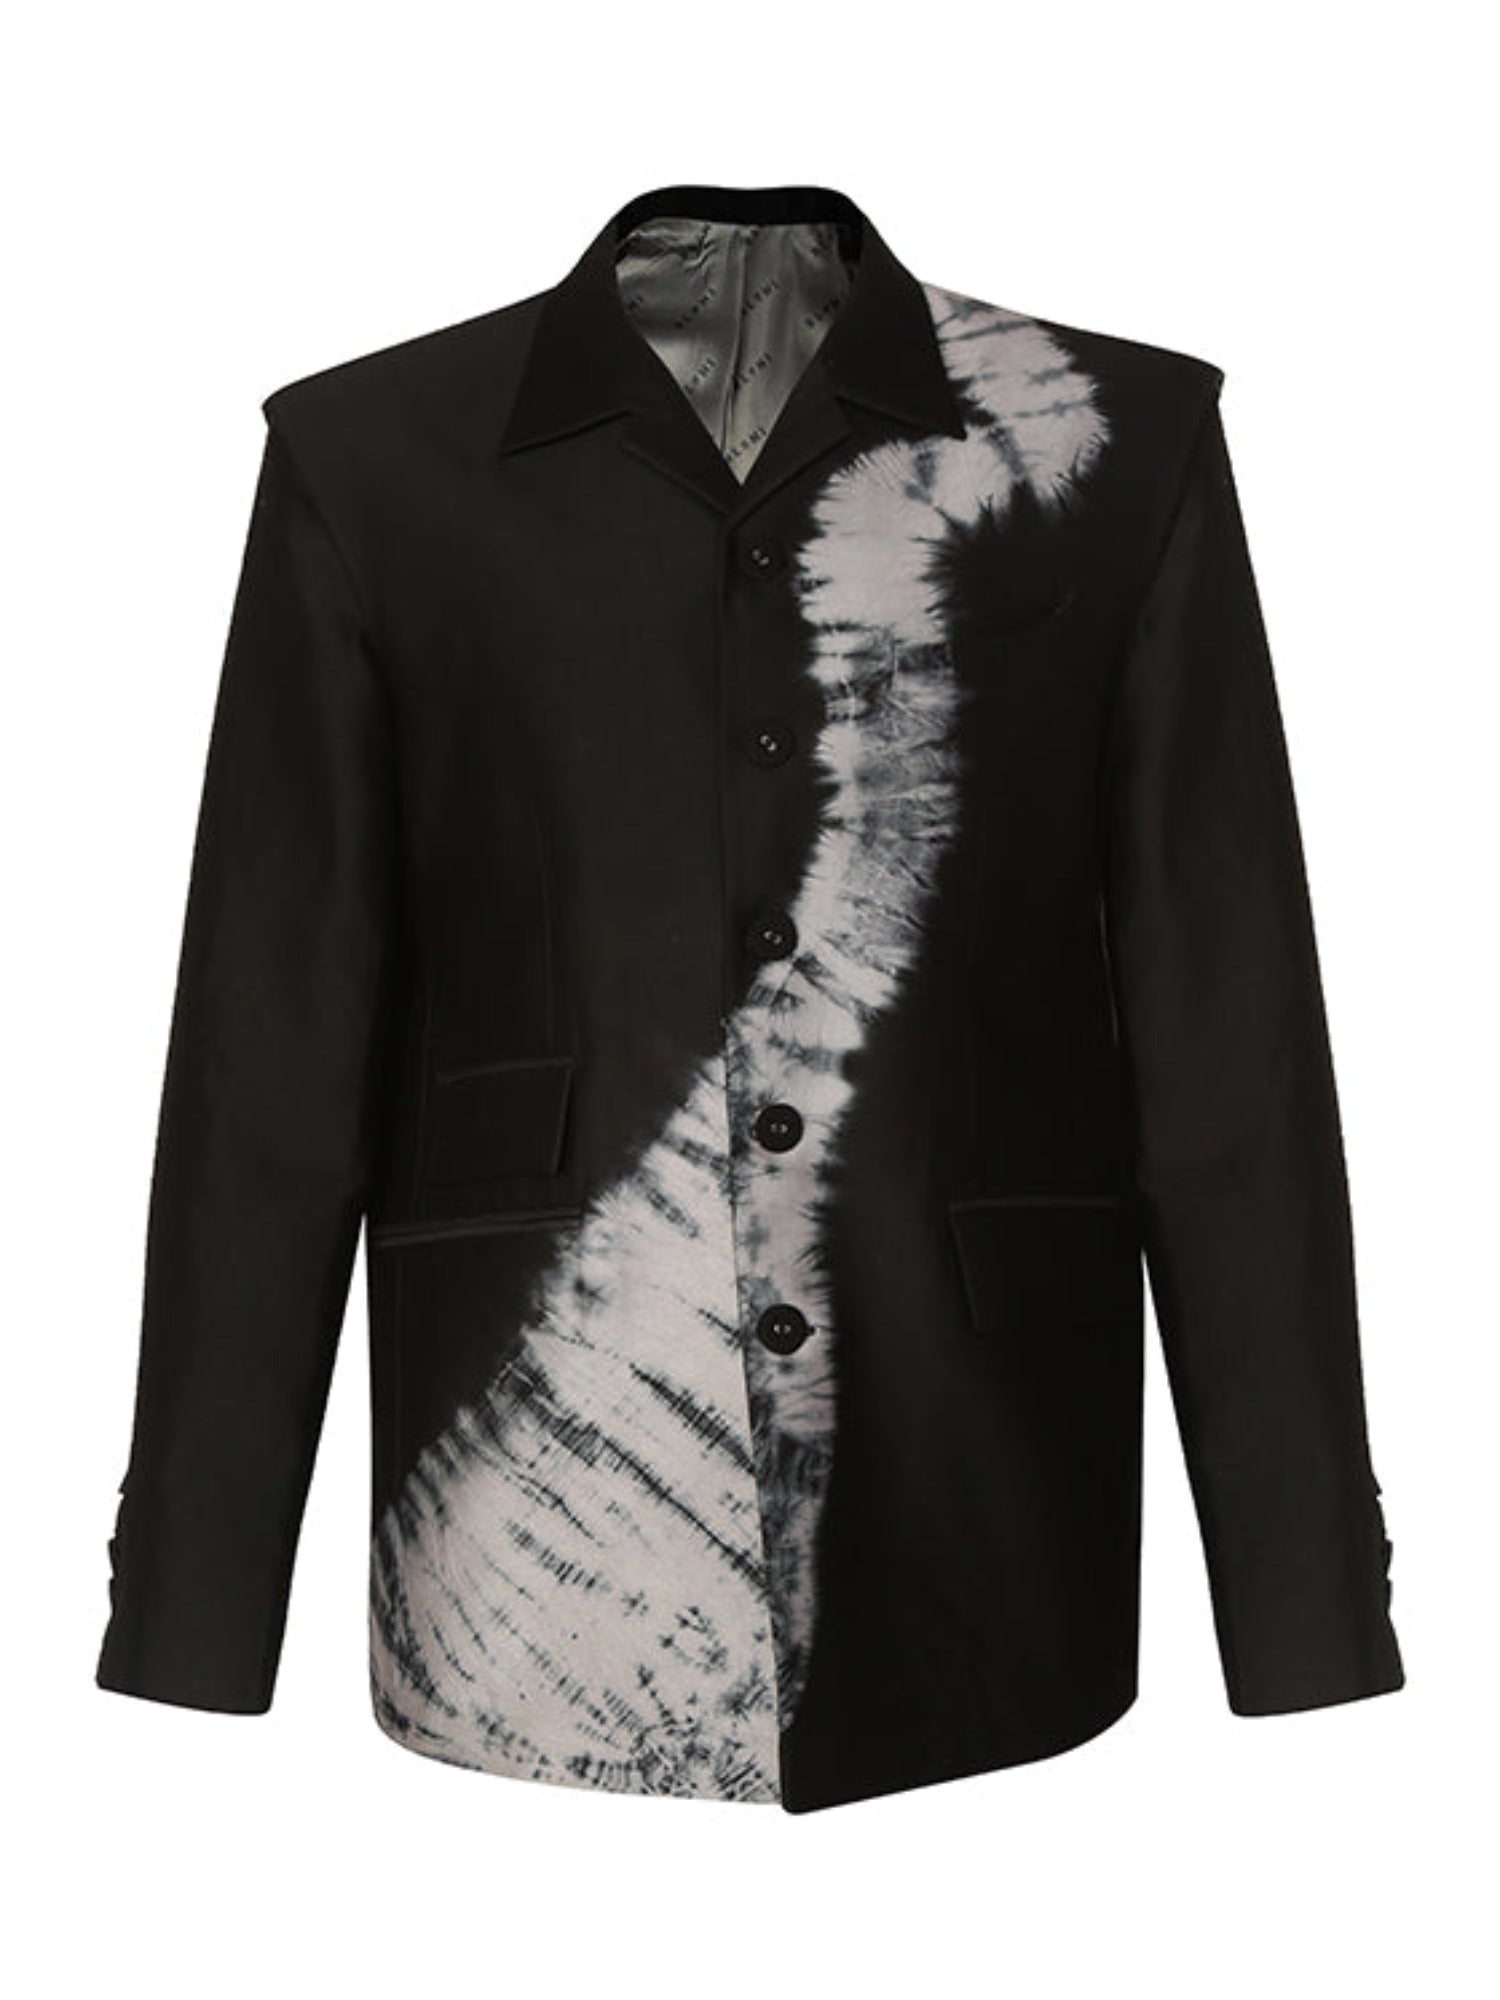 Stiff black buttoned jacket with tie-dye